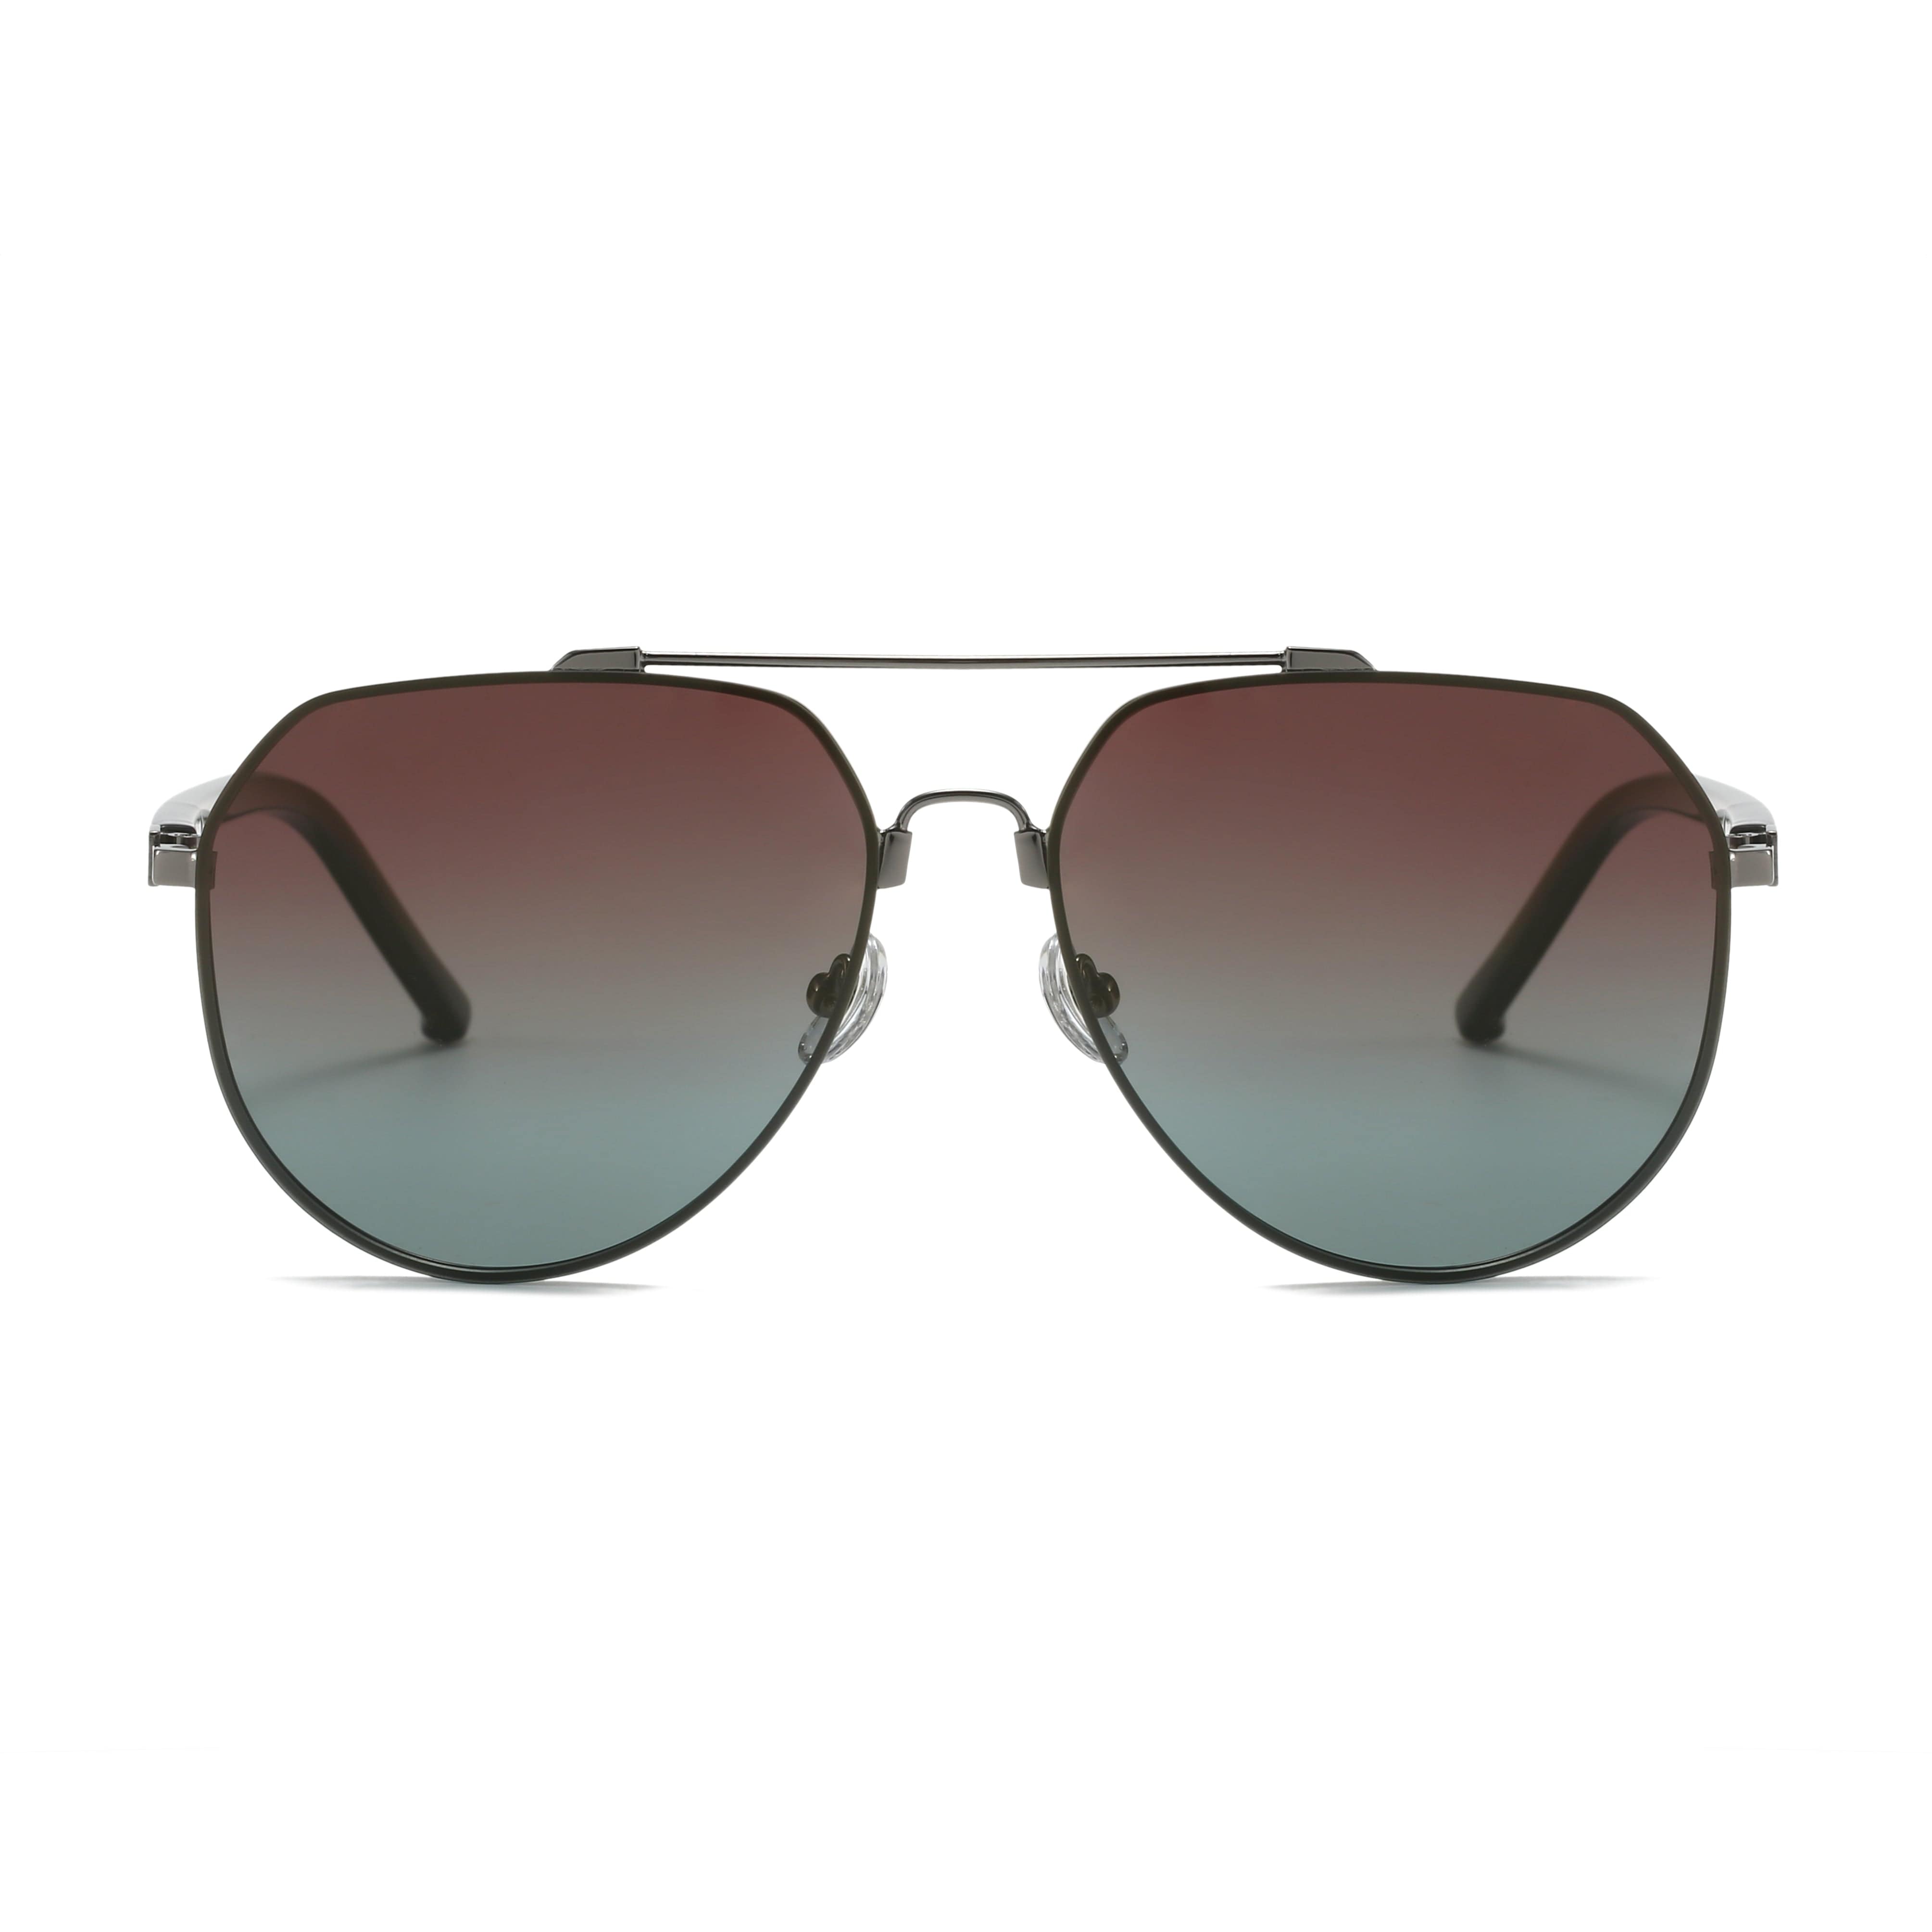 Men's & Women's Sunglasses - The Aviator - Gold/Green | Vincero Collective